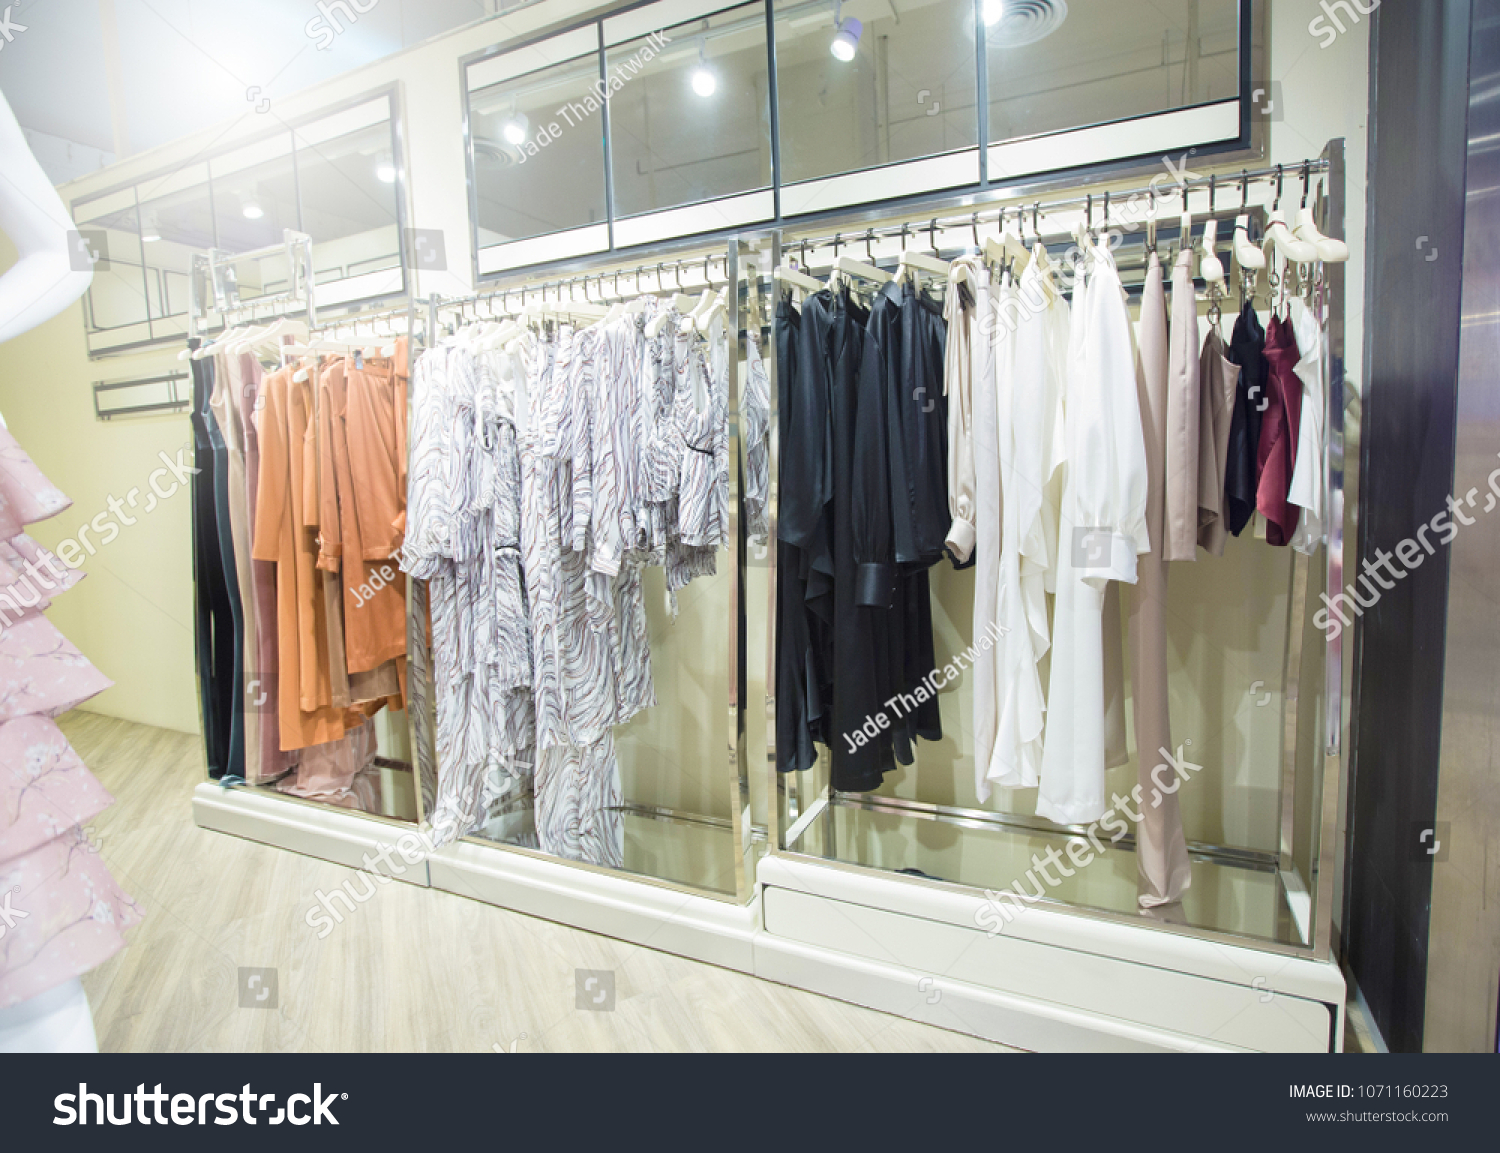 Fashion Design Clothes On Display Rack Stock Photo (Edit Now) 1071160223